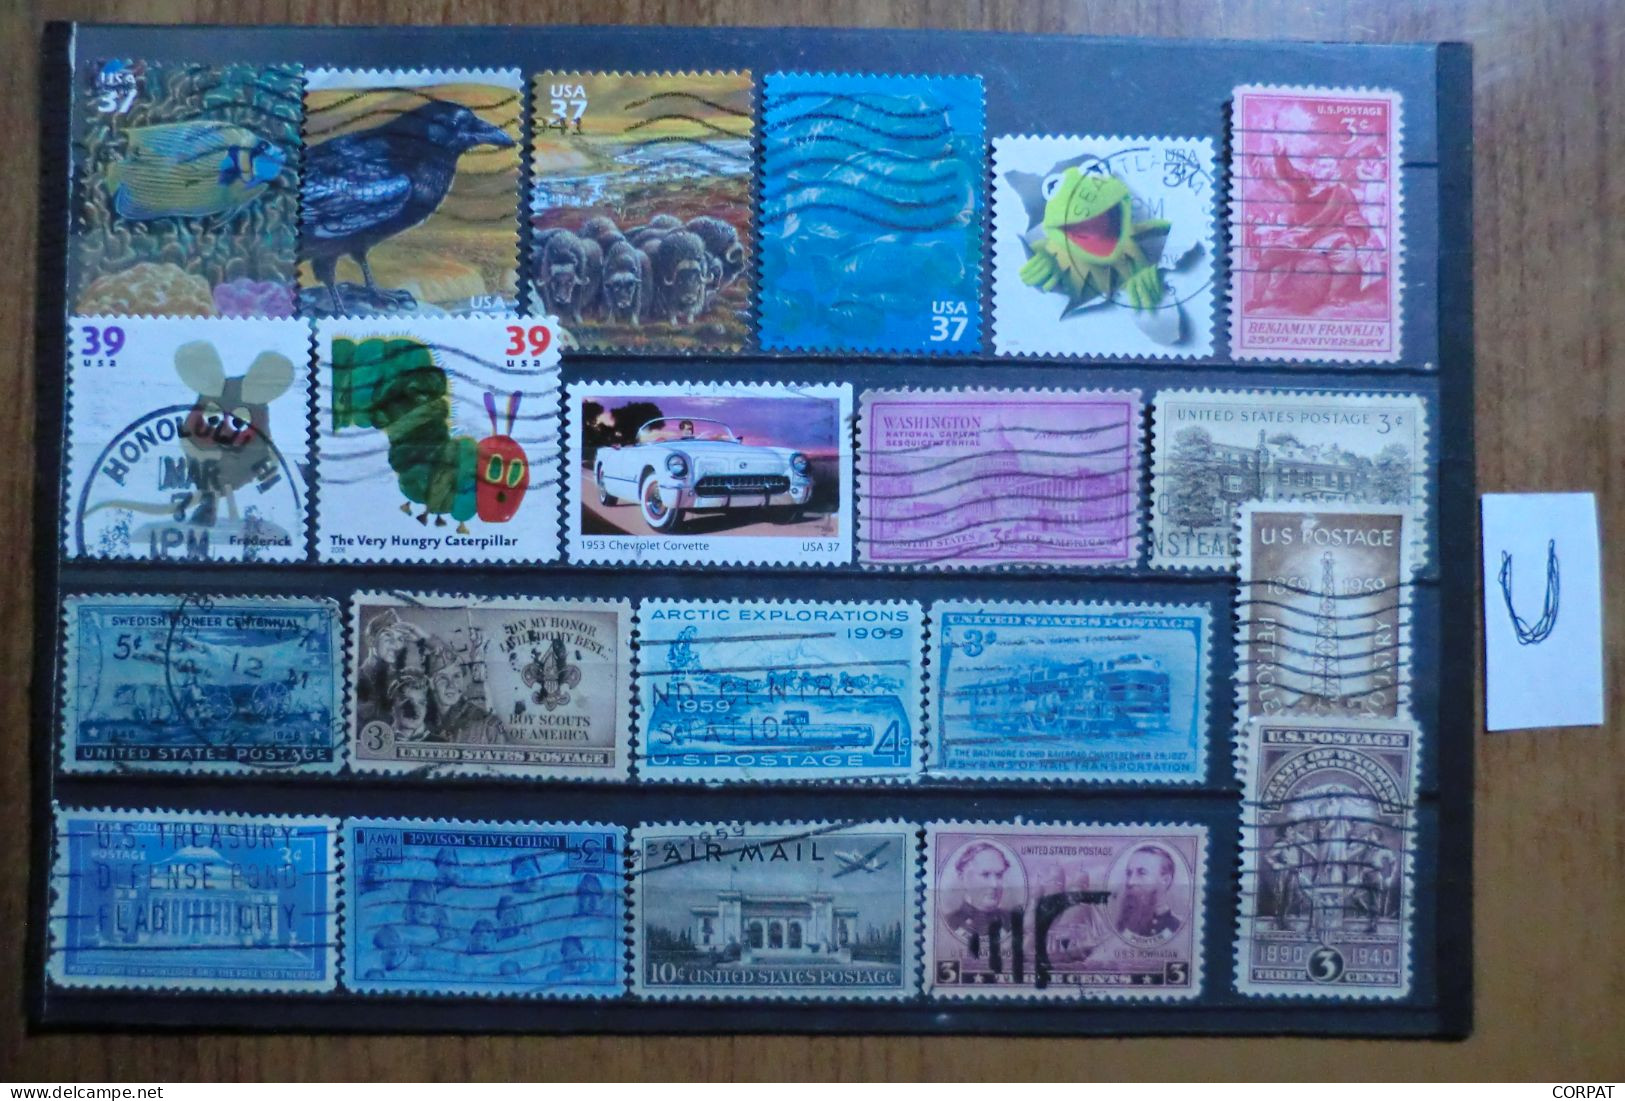 USA : Lotto di francobolli usati (7 photos)